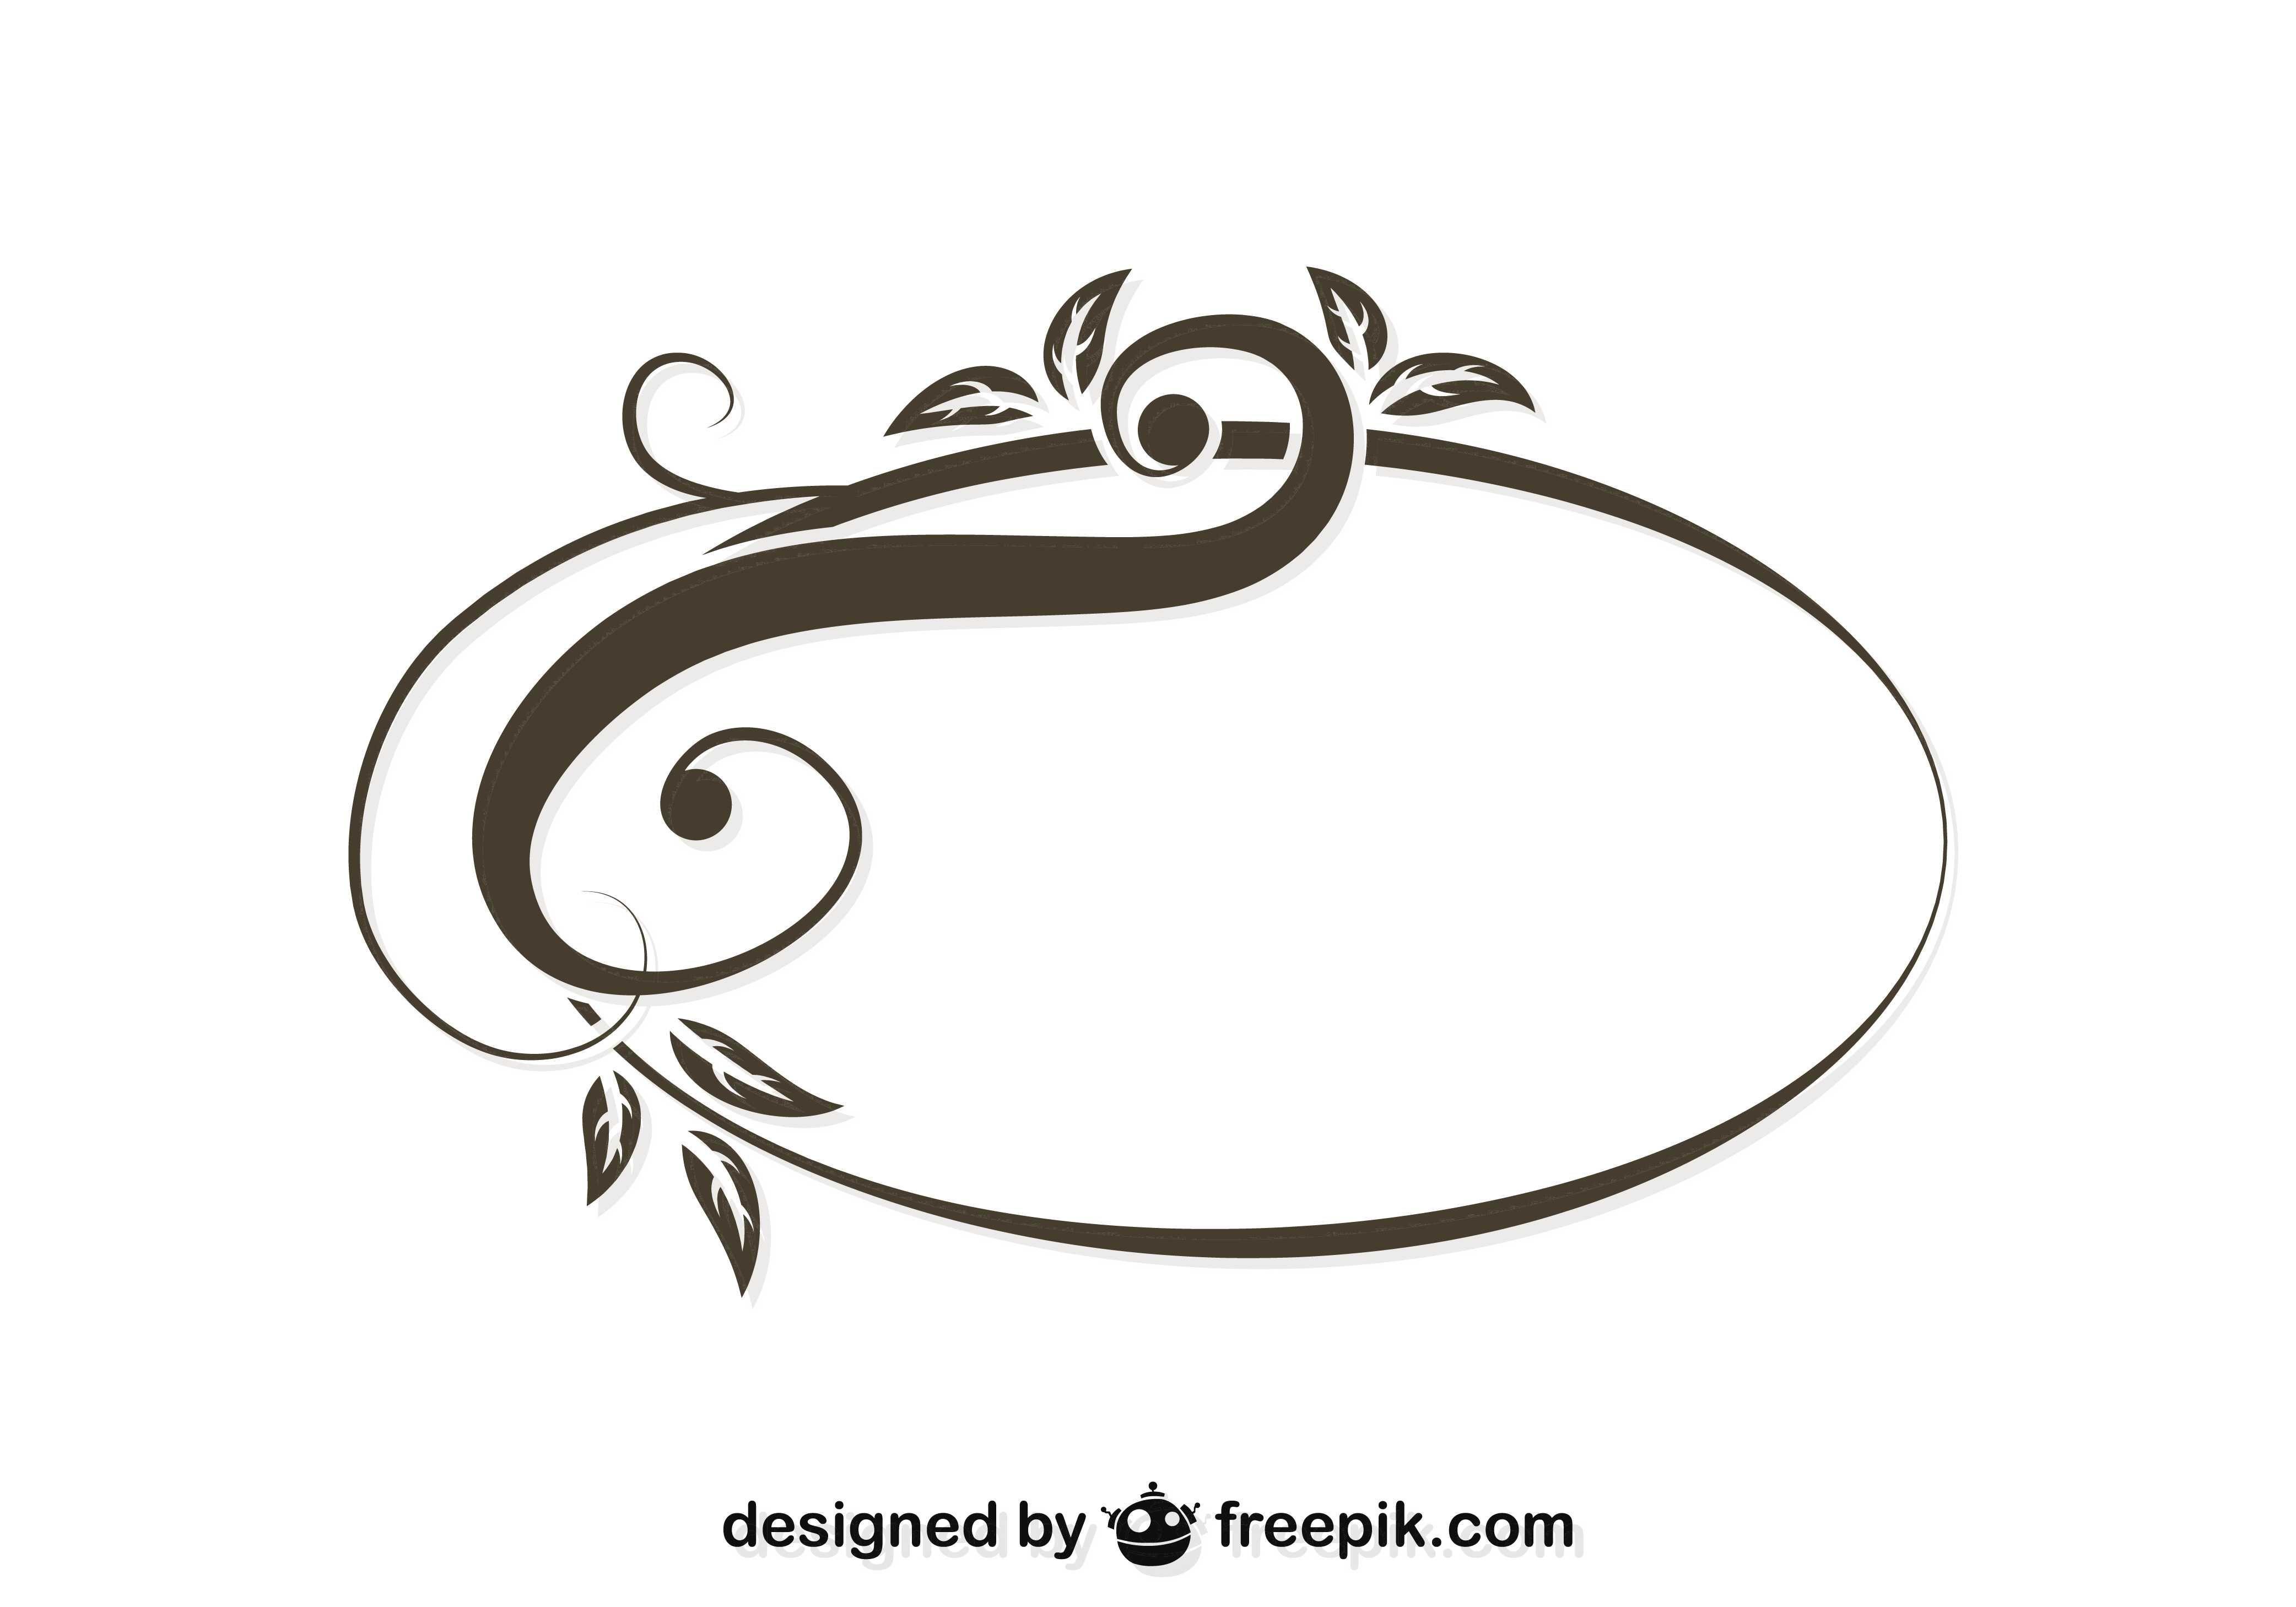 Oval Swirl Logo - Retro Asymmetrical Oval Swirl Stylish Design - FREE | Design Space ...